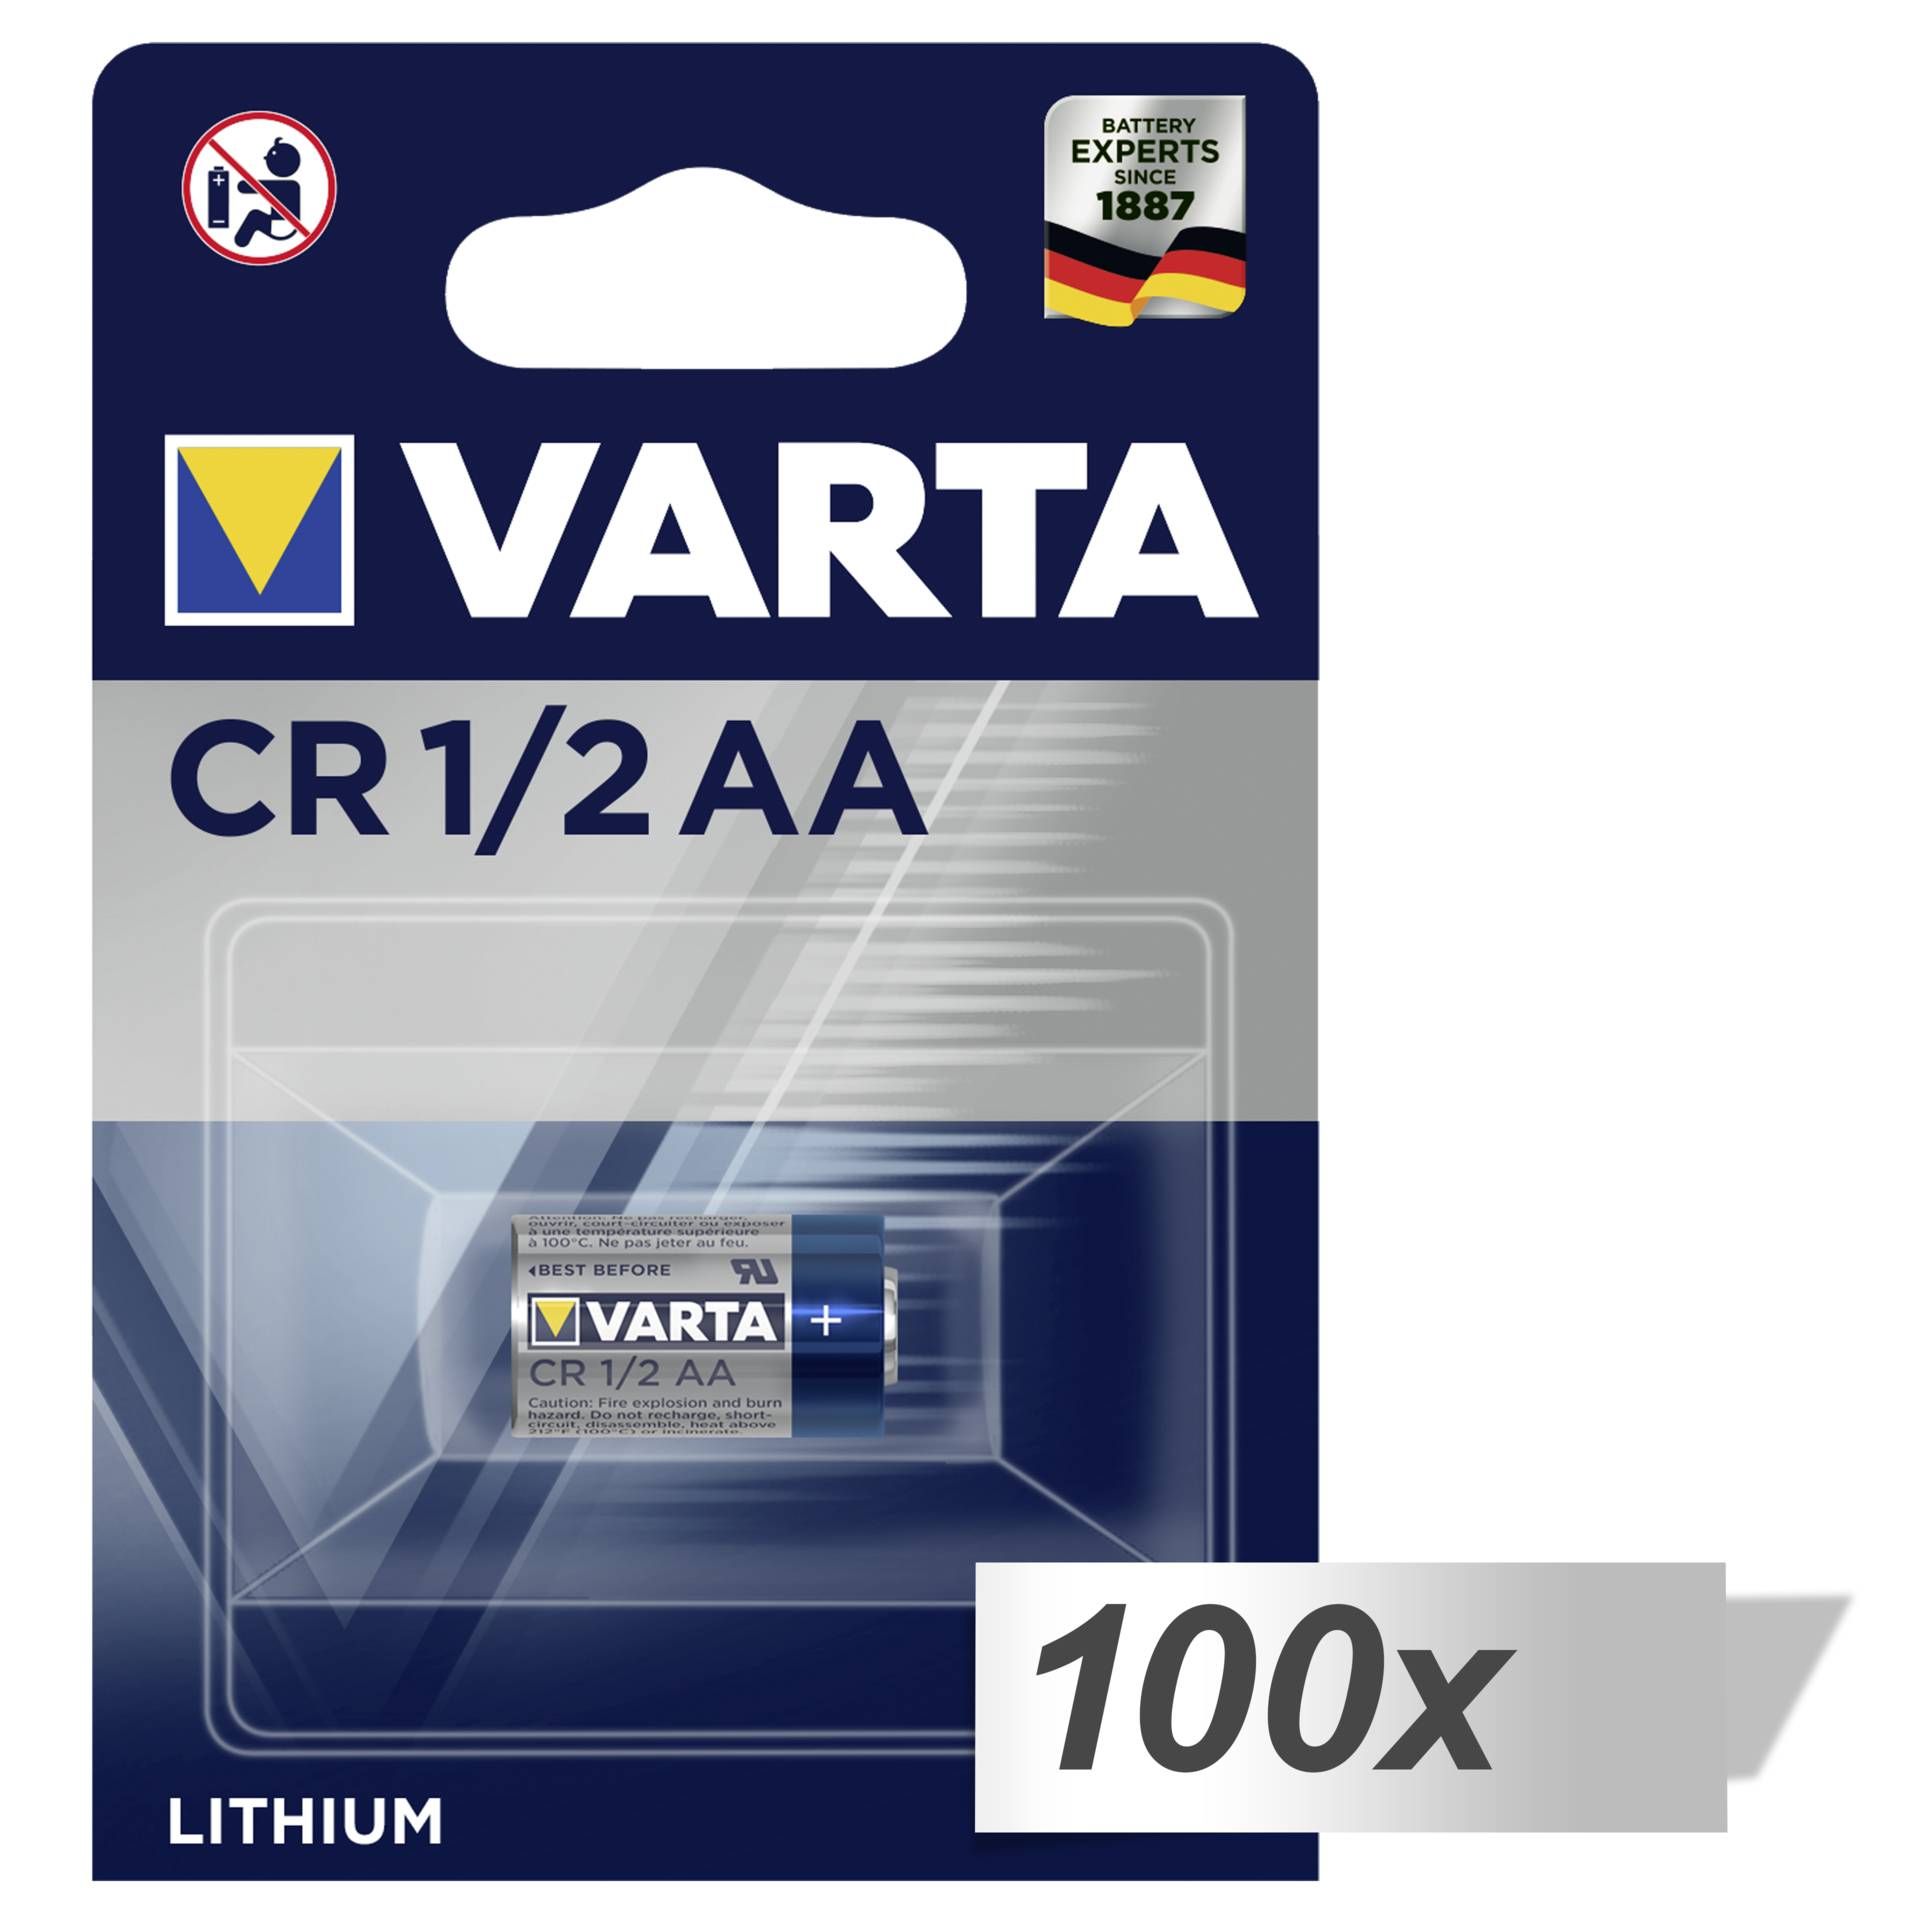 1x100 Varta Lithium CR 1/2 AA 700mAh 3V